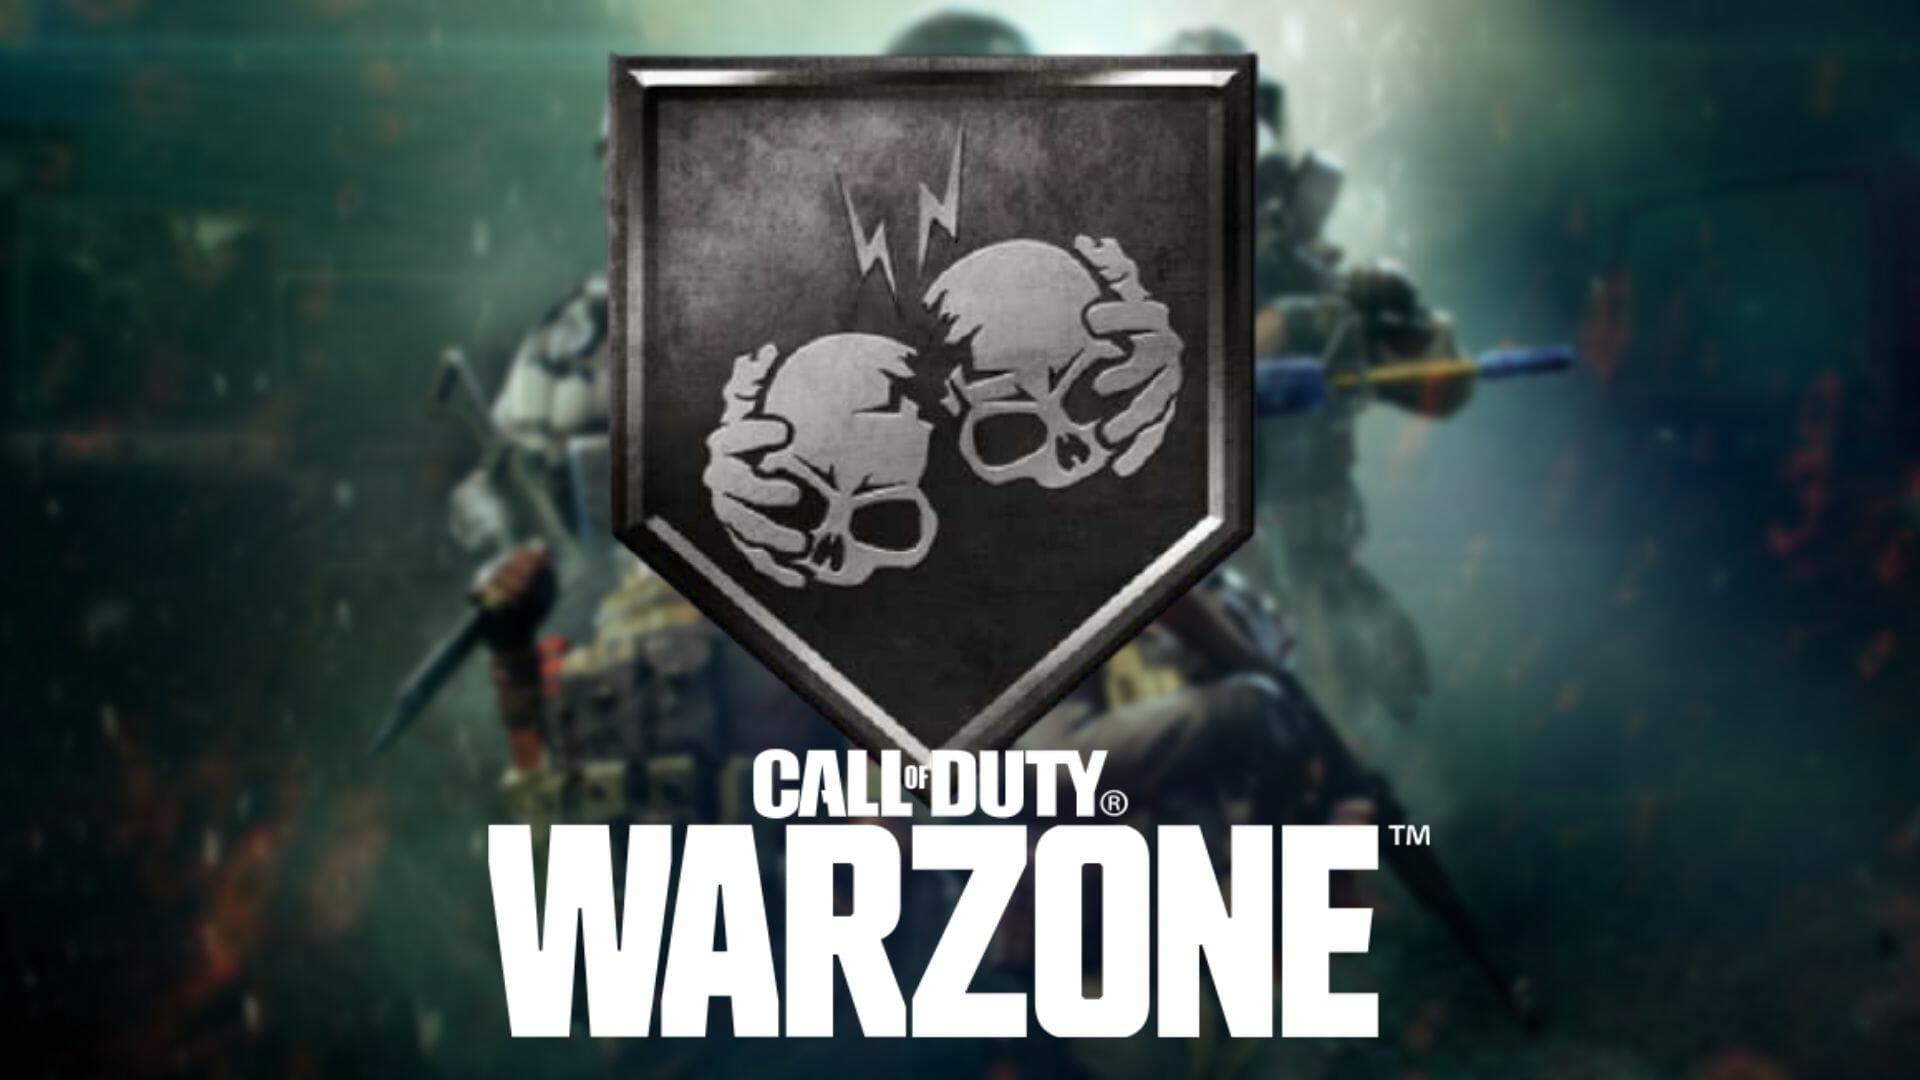 iron trials logo over warzone operators